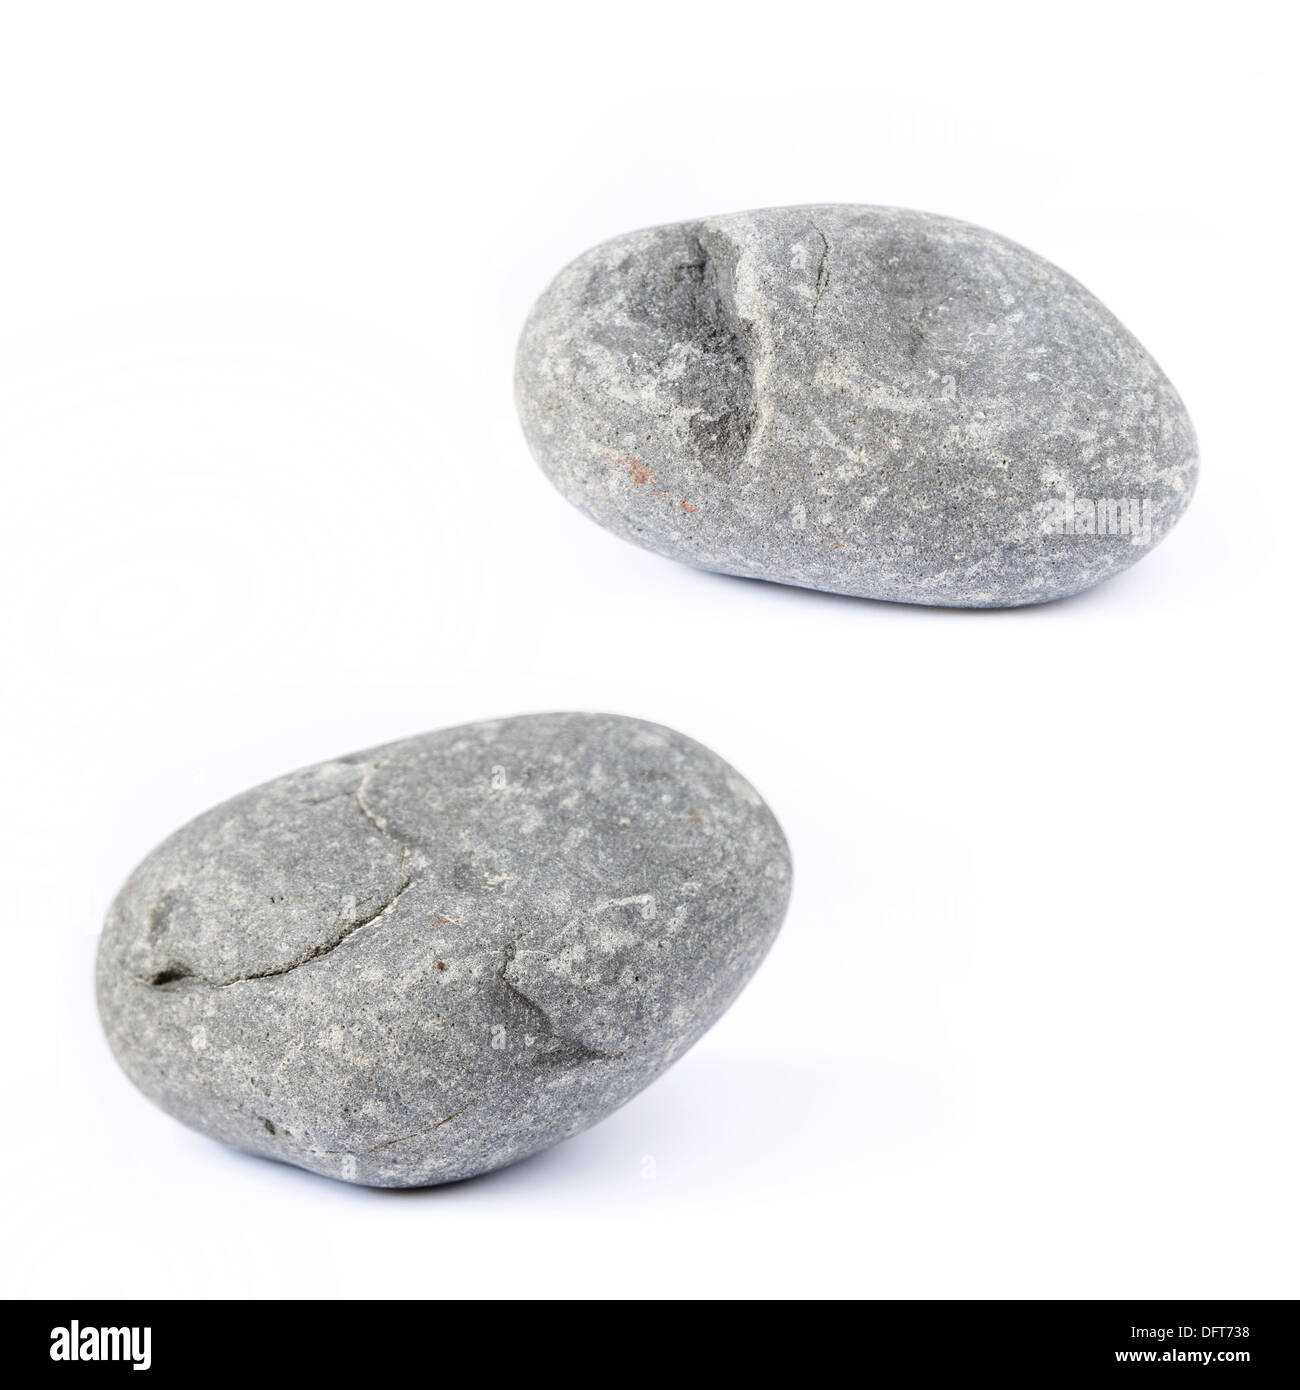 Two rocks on plain background Stock Photo